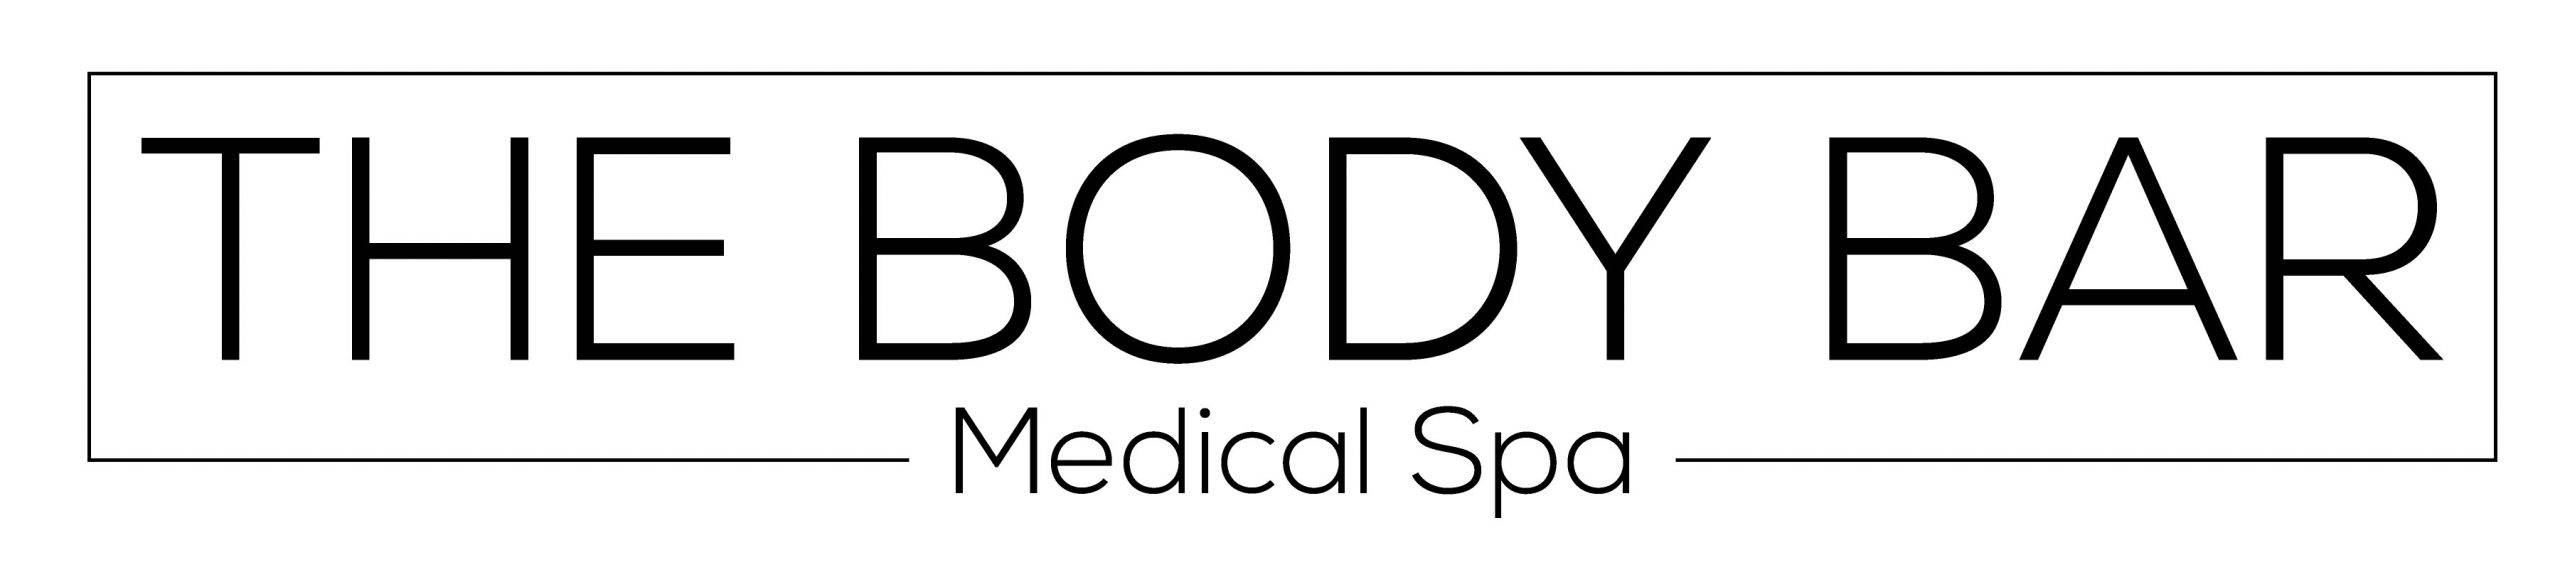 the body bar logo horizontal